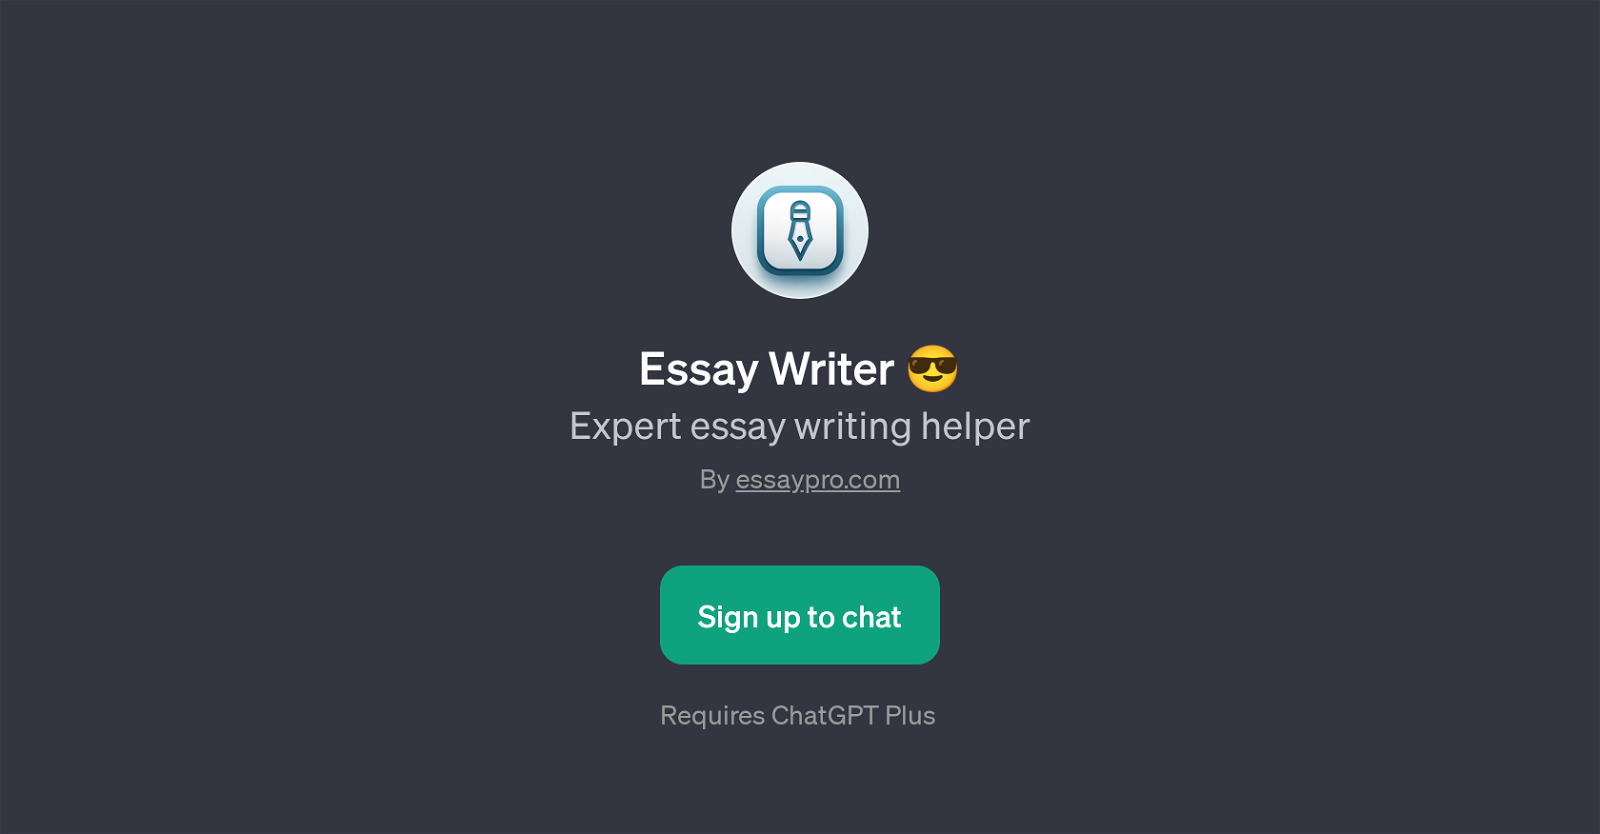 Essay Writer website